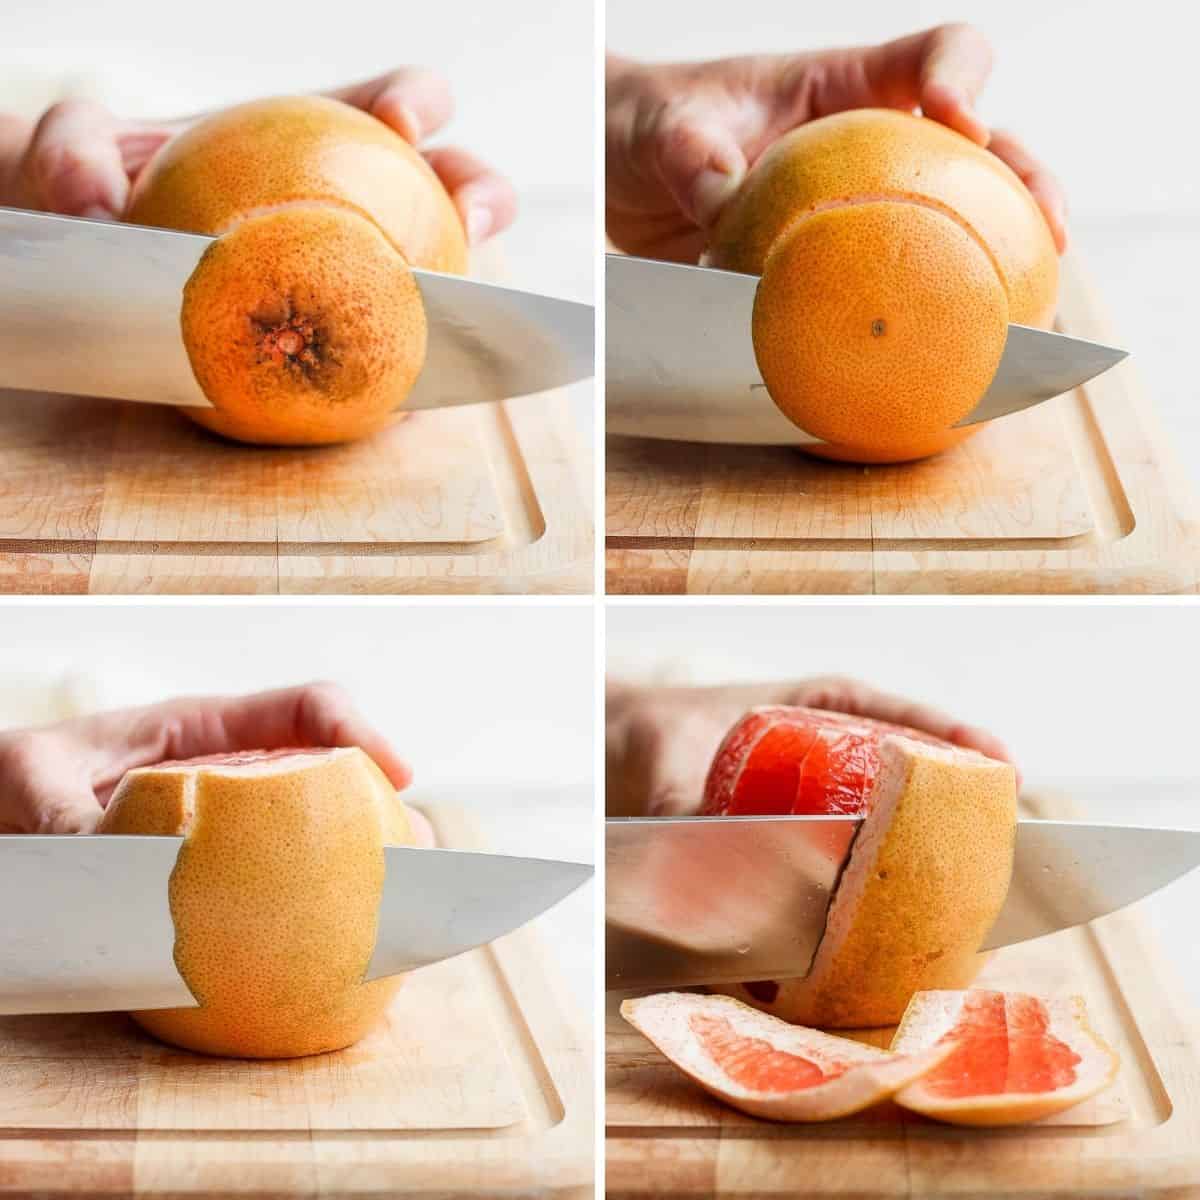 Tutorial to show how to cut grapefruit